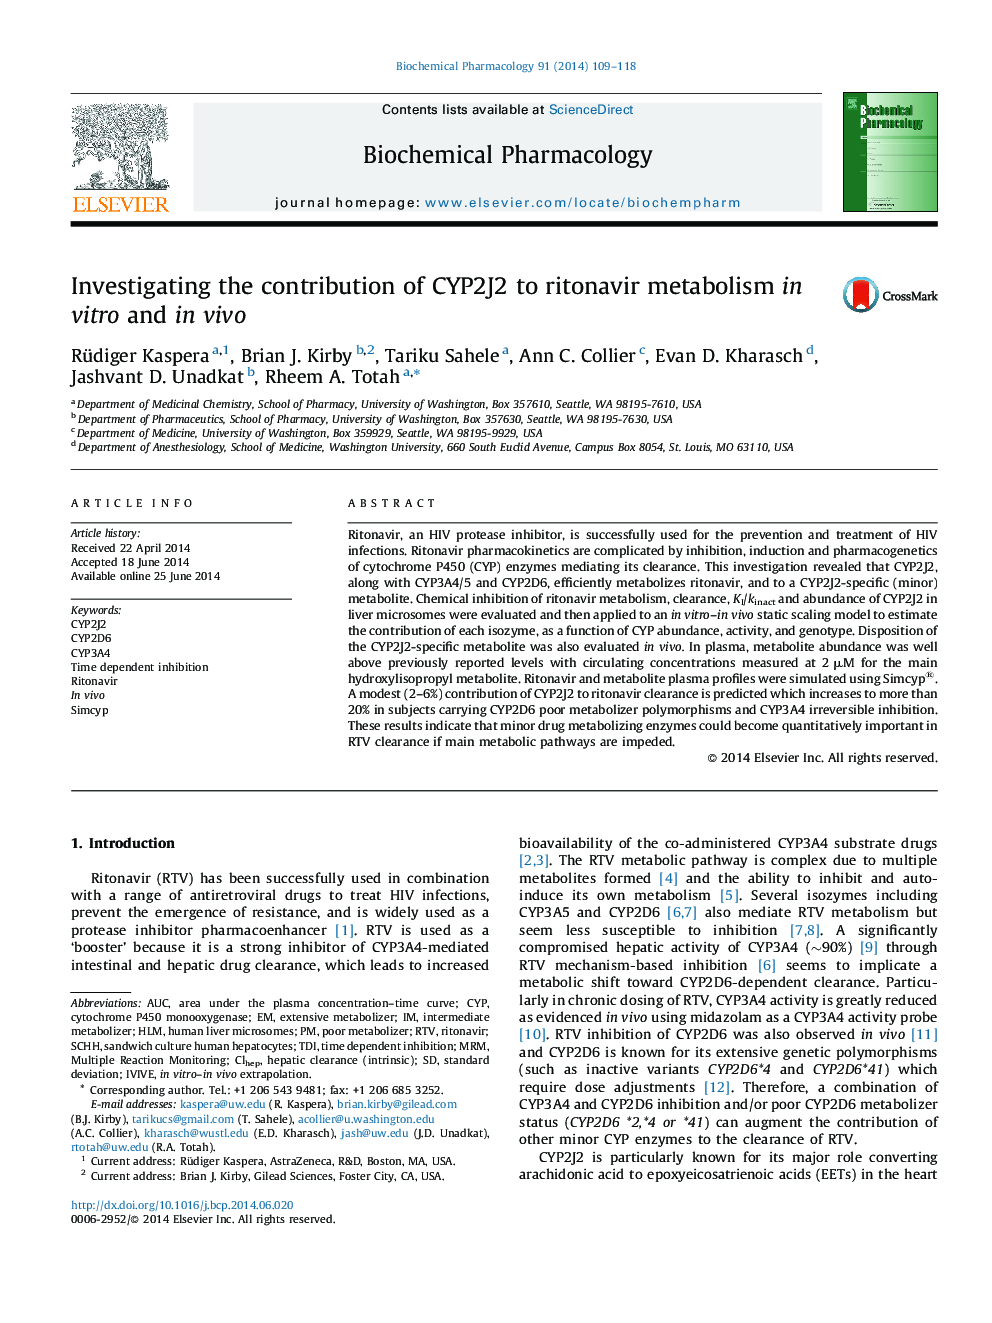 Investigating the contribution of CYP2J2 to ritonavir metabolism in vitro and in vivo